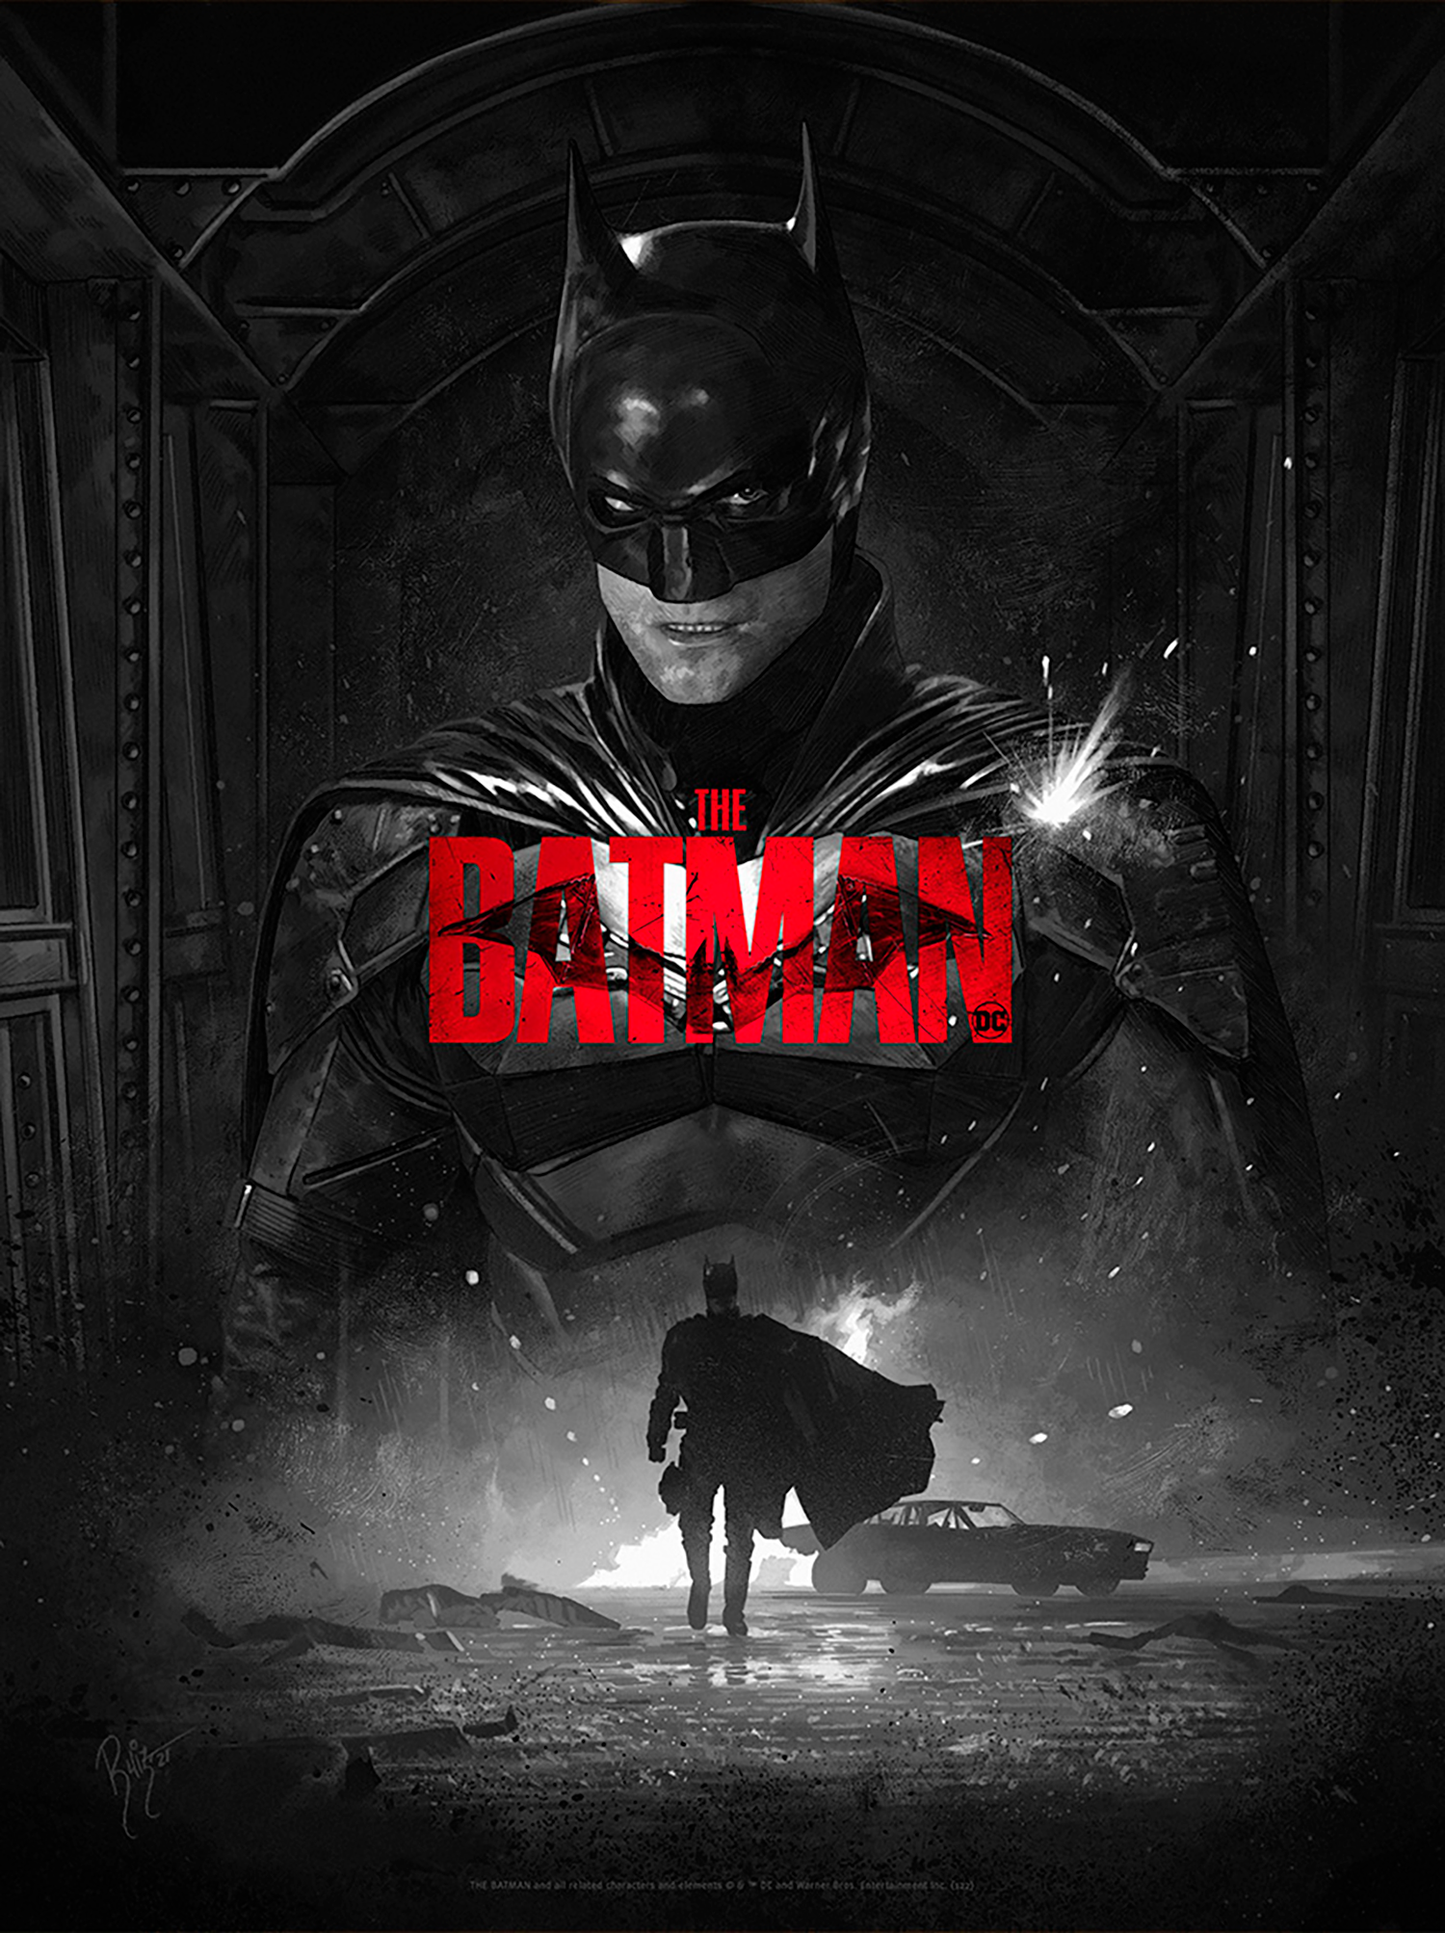 Juan Burgos "The Batman" Variant